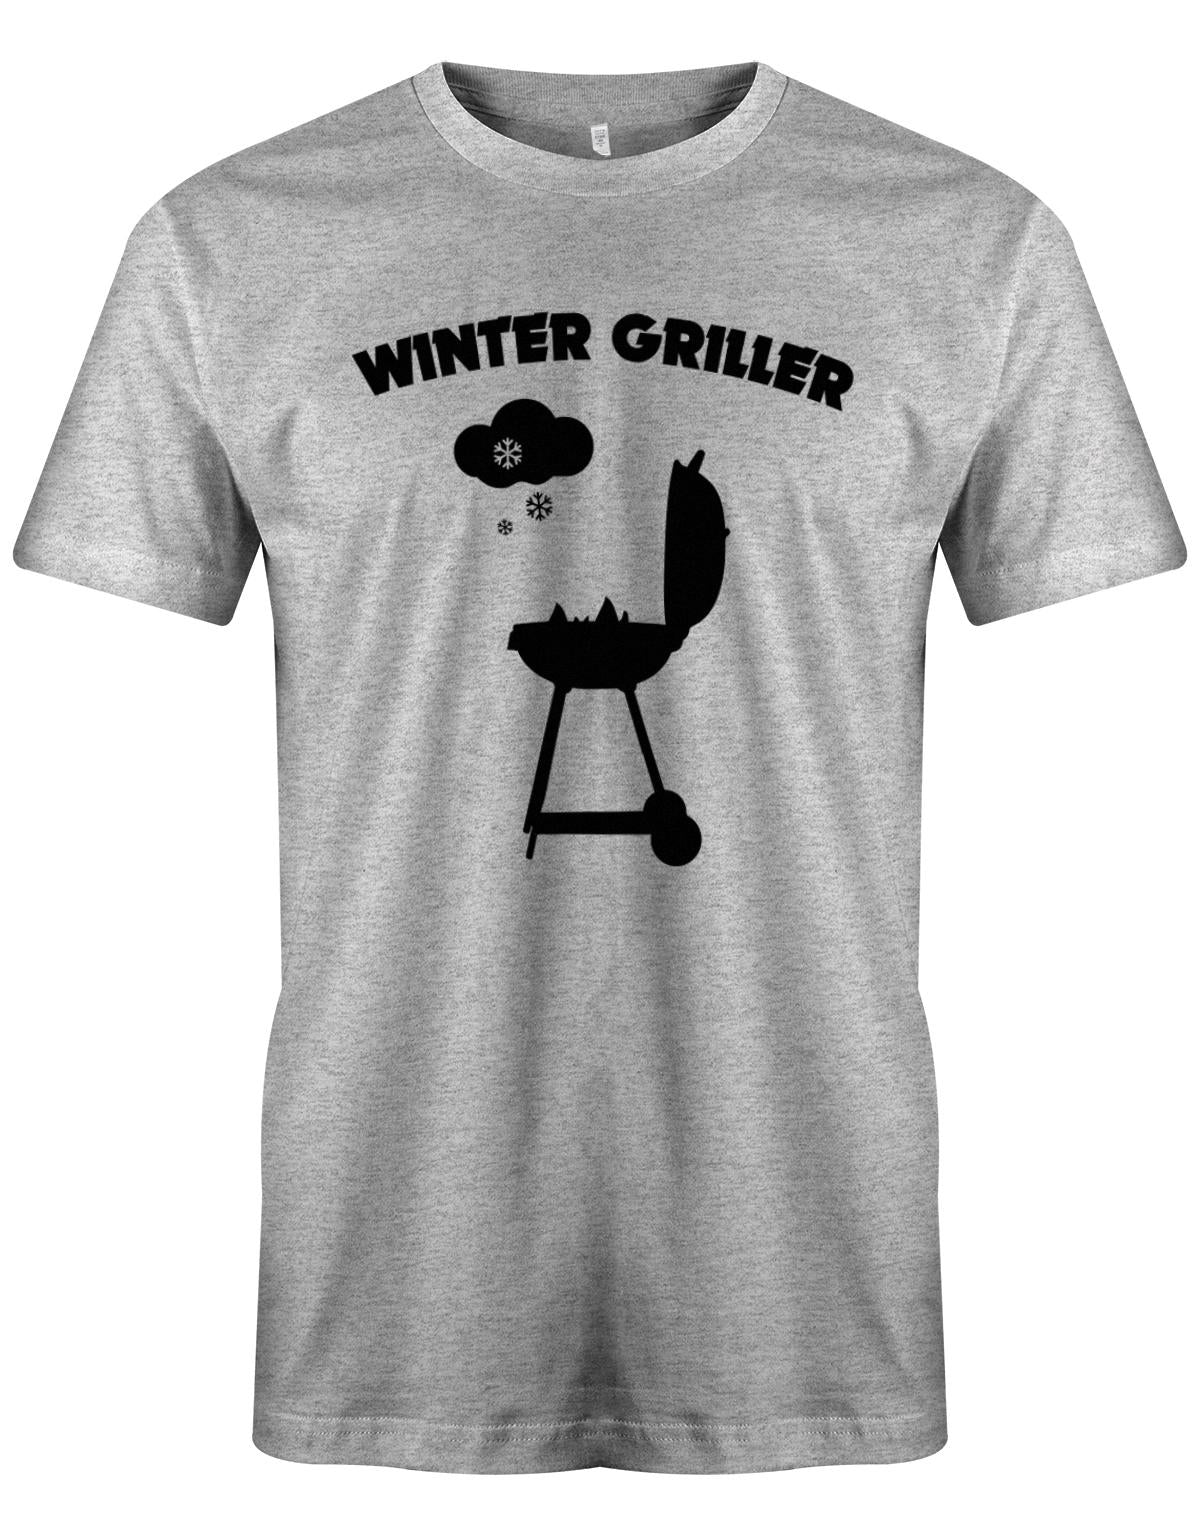 Winter-Griller-Schnee-Herren-Grill-Shirt-grau